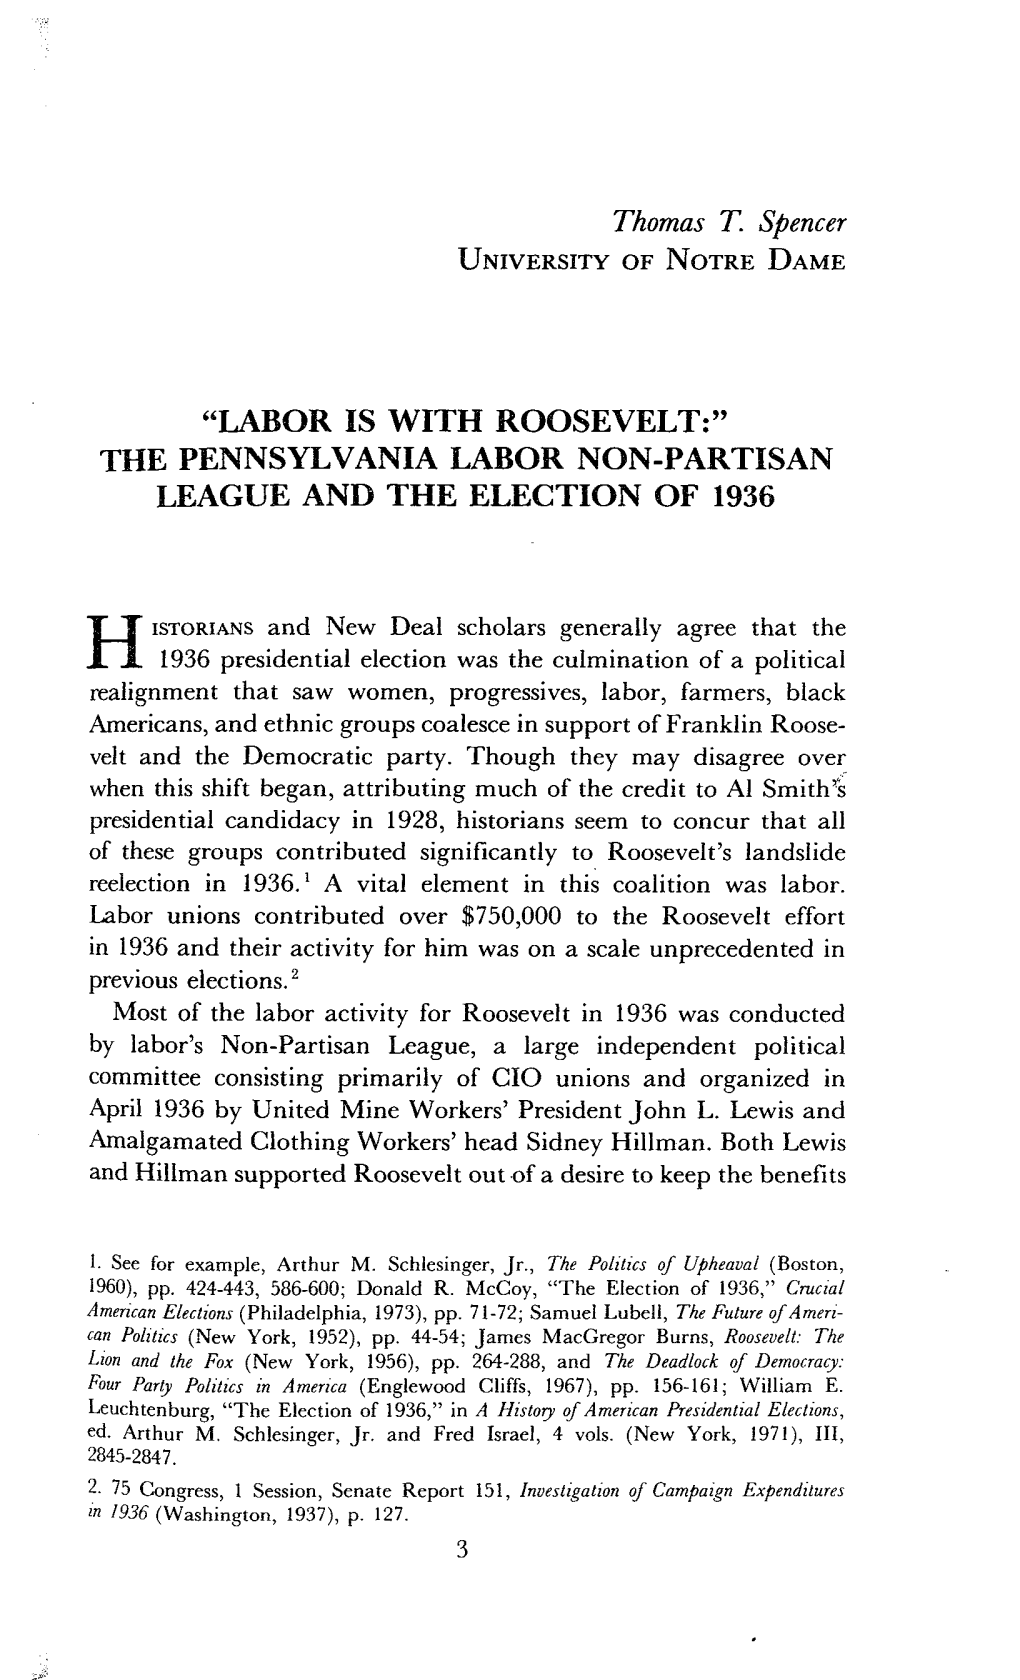 The Pennsylvania Labor Non-Partisan League and the Election of 1936